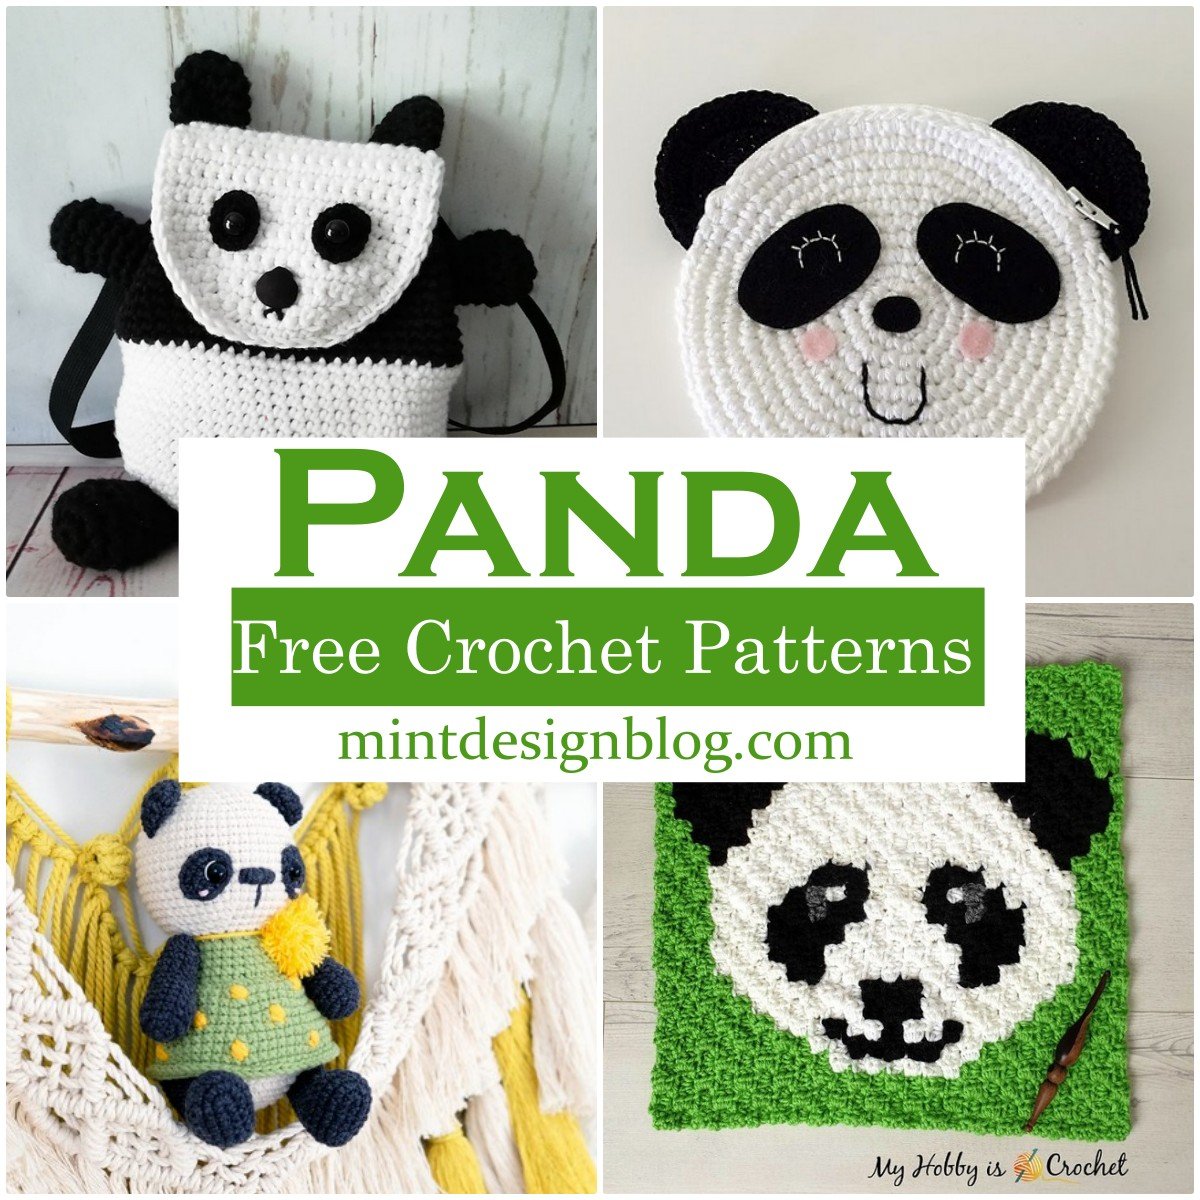 24 Free Crochet Panda Patterns - Mint Design Blog